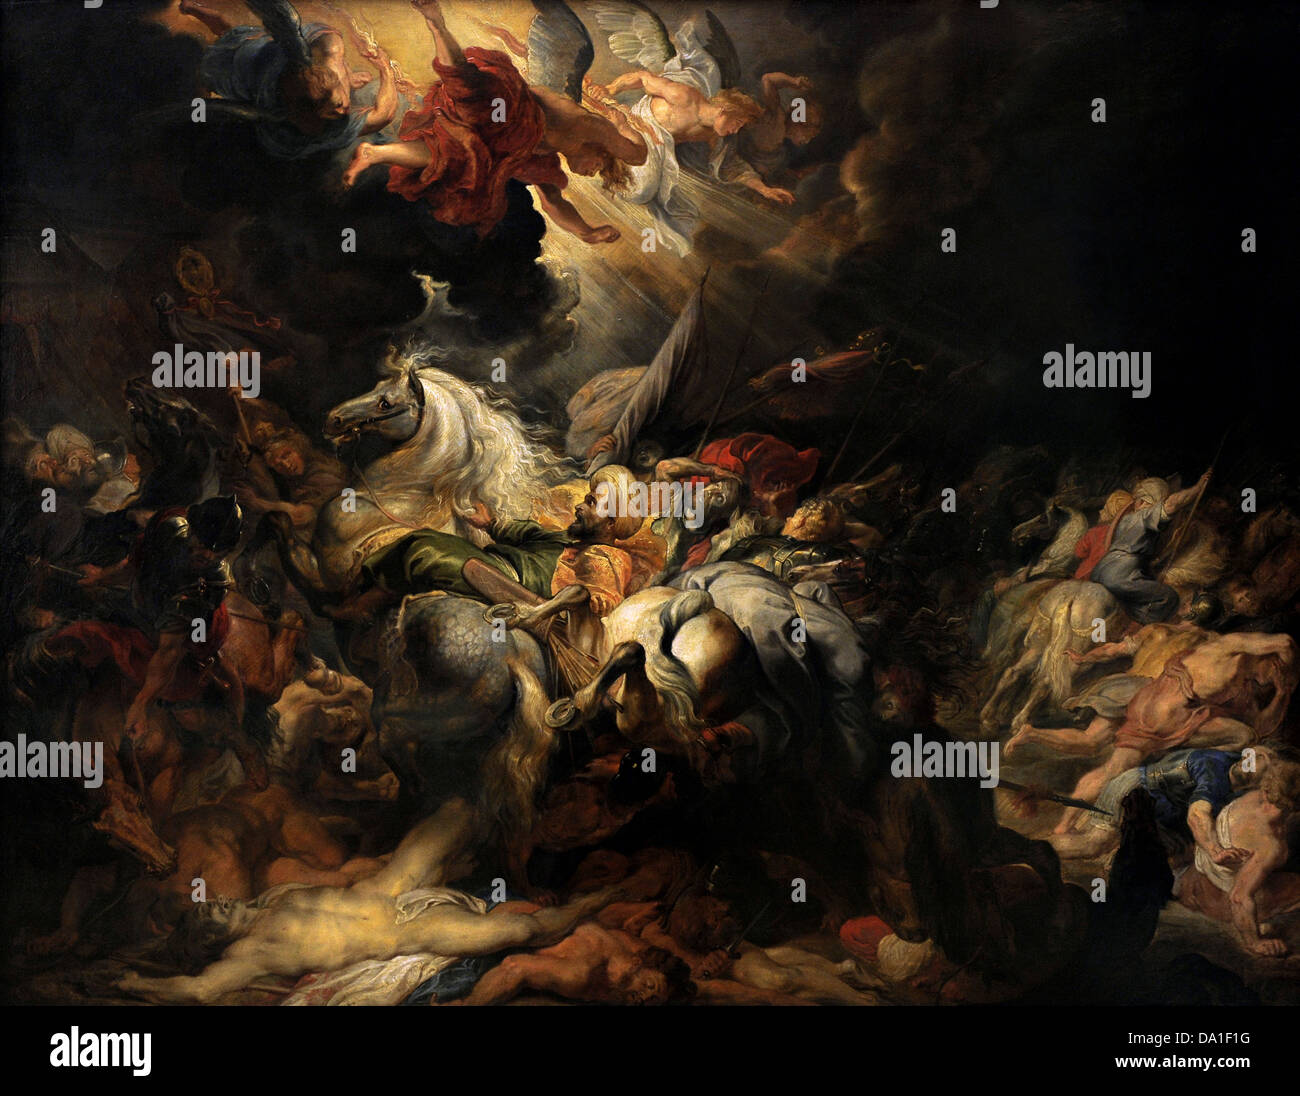 Peter Paul Rubens (1577-1640). Pittore fiammingo. La sconfitta di Sennacherib, 1616-1618. Alte Pinakothek. Monaco di Baviera. Germania. Foto Stock